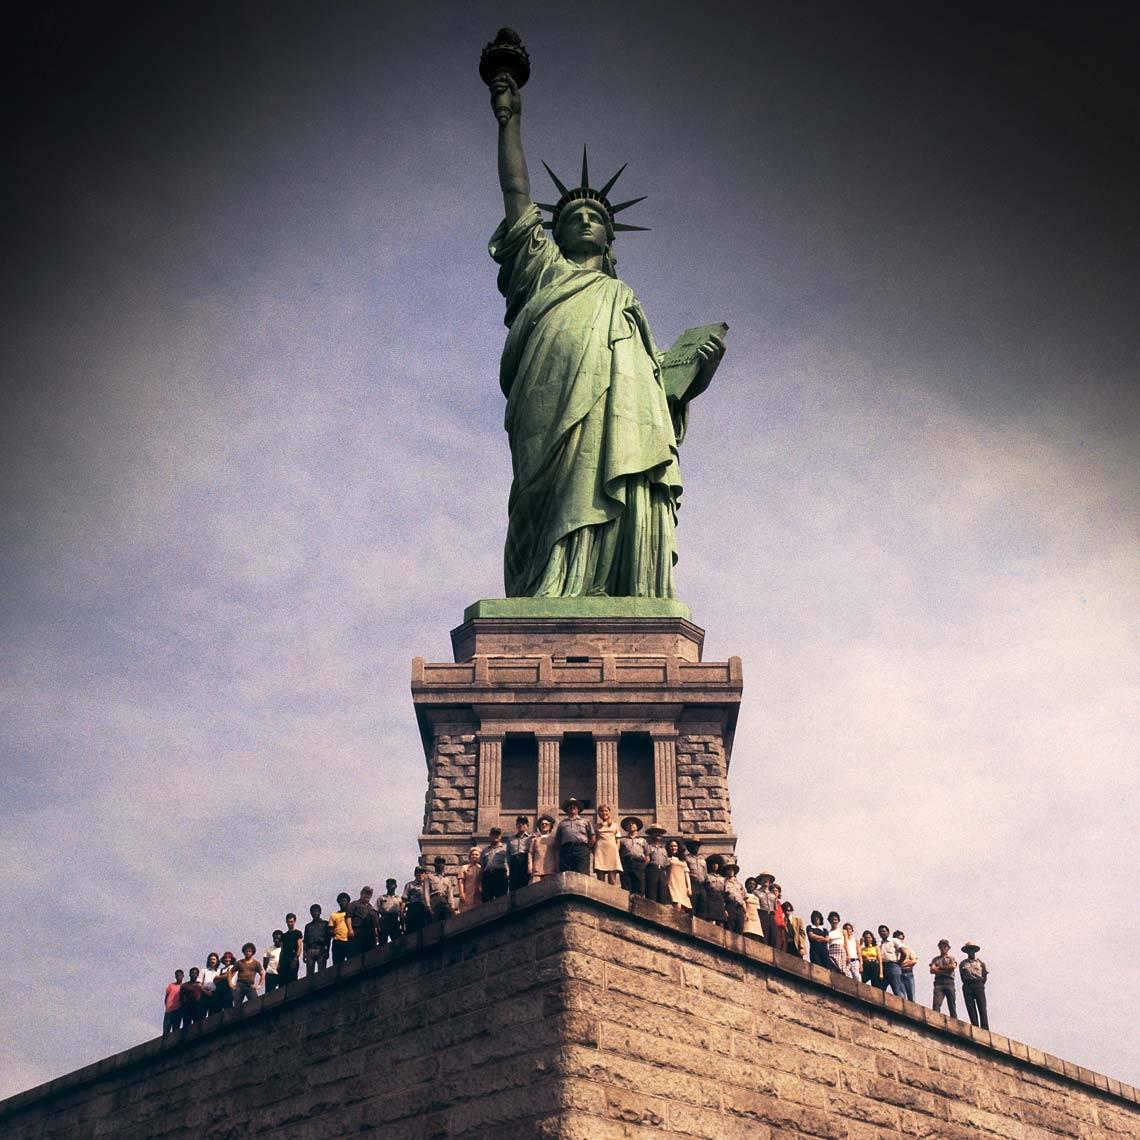 Neal Slavin Color Photograph – Staff of Statue of Liberty, Liberty Island, NY